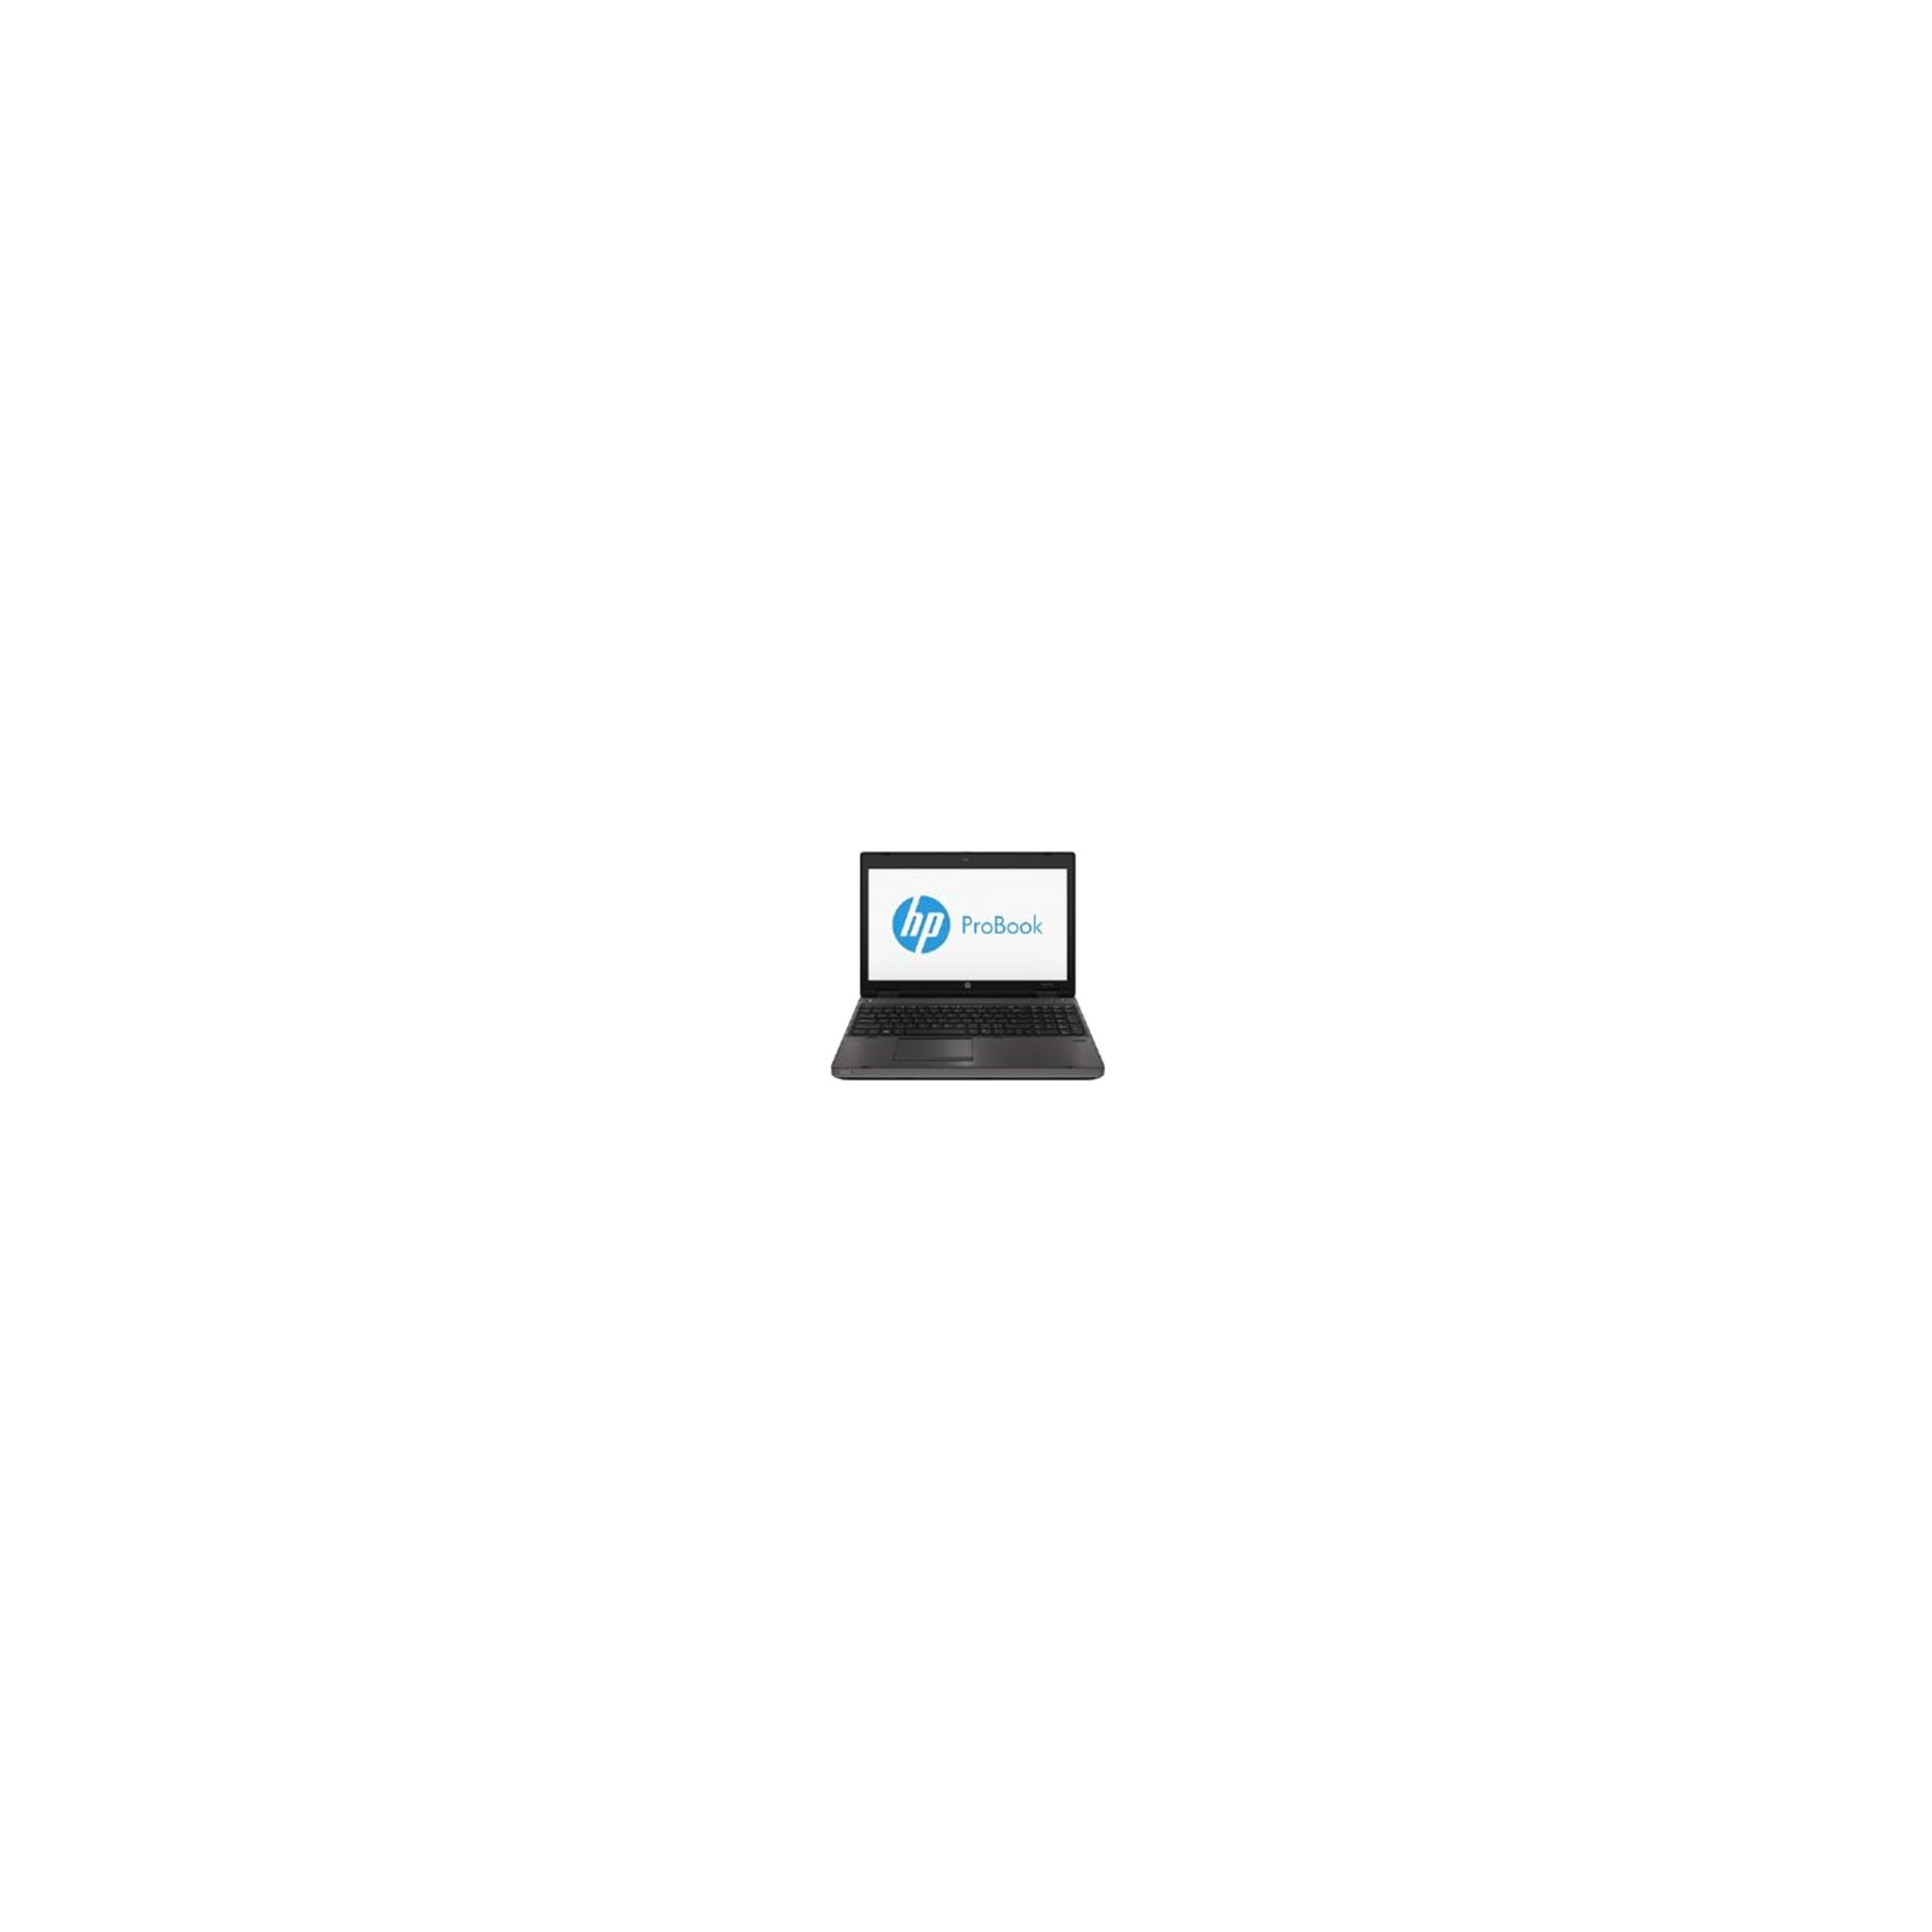 HP ProBook 6570b (15.6 inch) Notebook Core i5 (3210M) 2.5GHz 4GB 500GB DVD±RW SM DL WLAN WWAN BT Webcam Windows 7 Pro 64-bit (Intel HD Graphics) at Tesco Direct